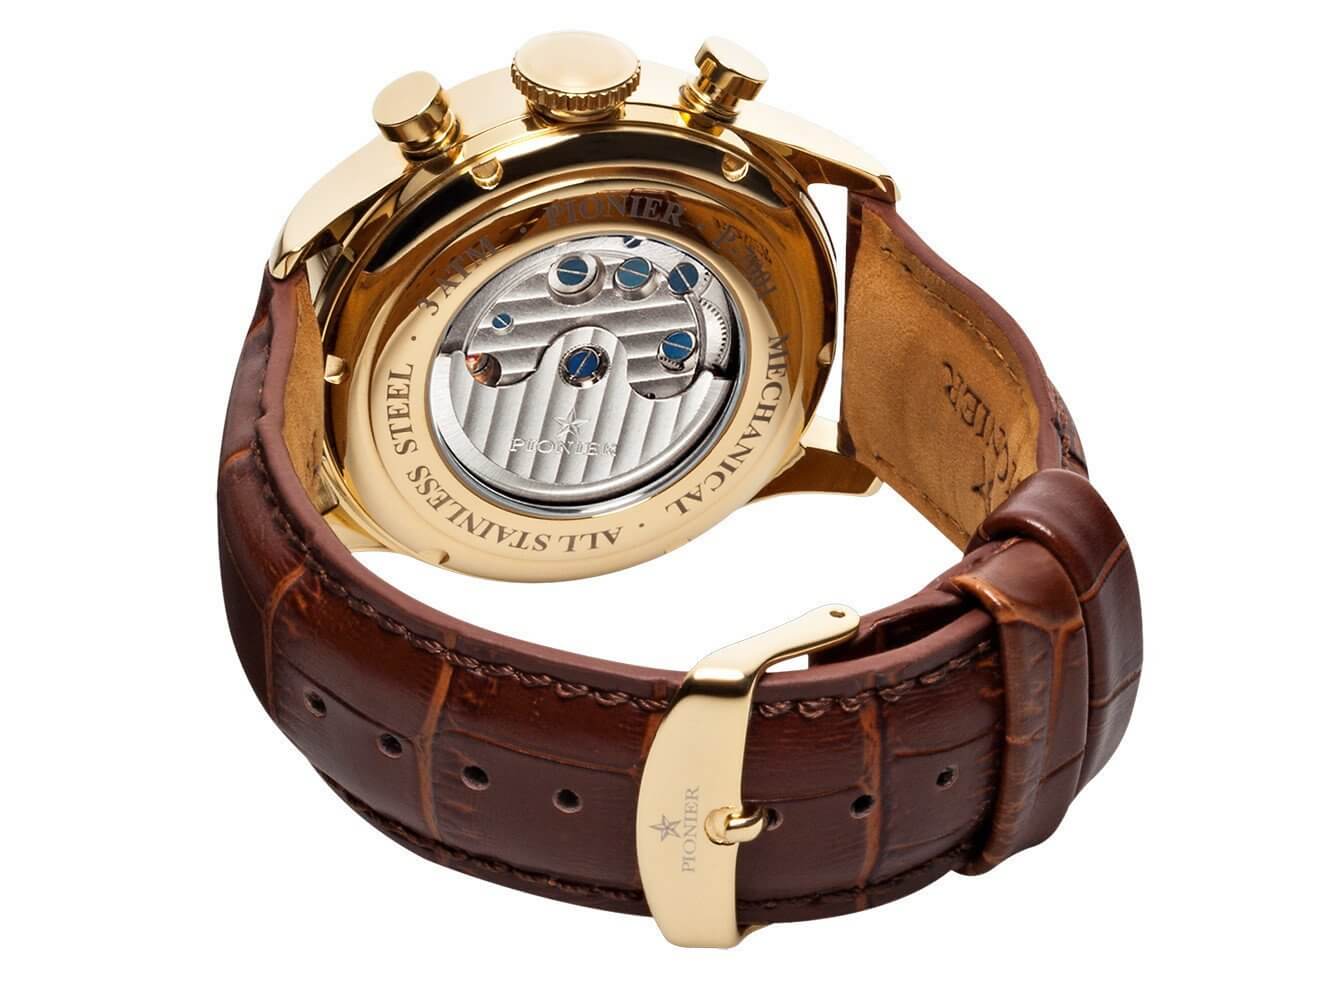 H. Moser & Cie's Edouard Meylan On The New Pioneer Watch